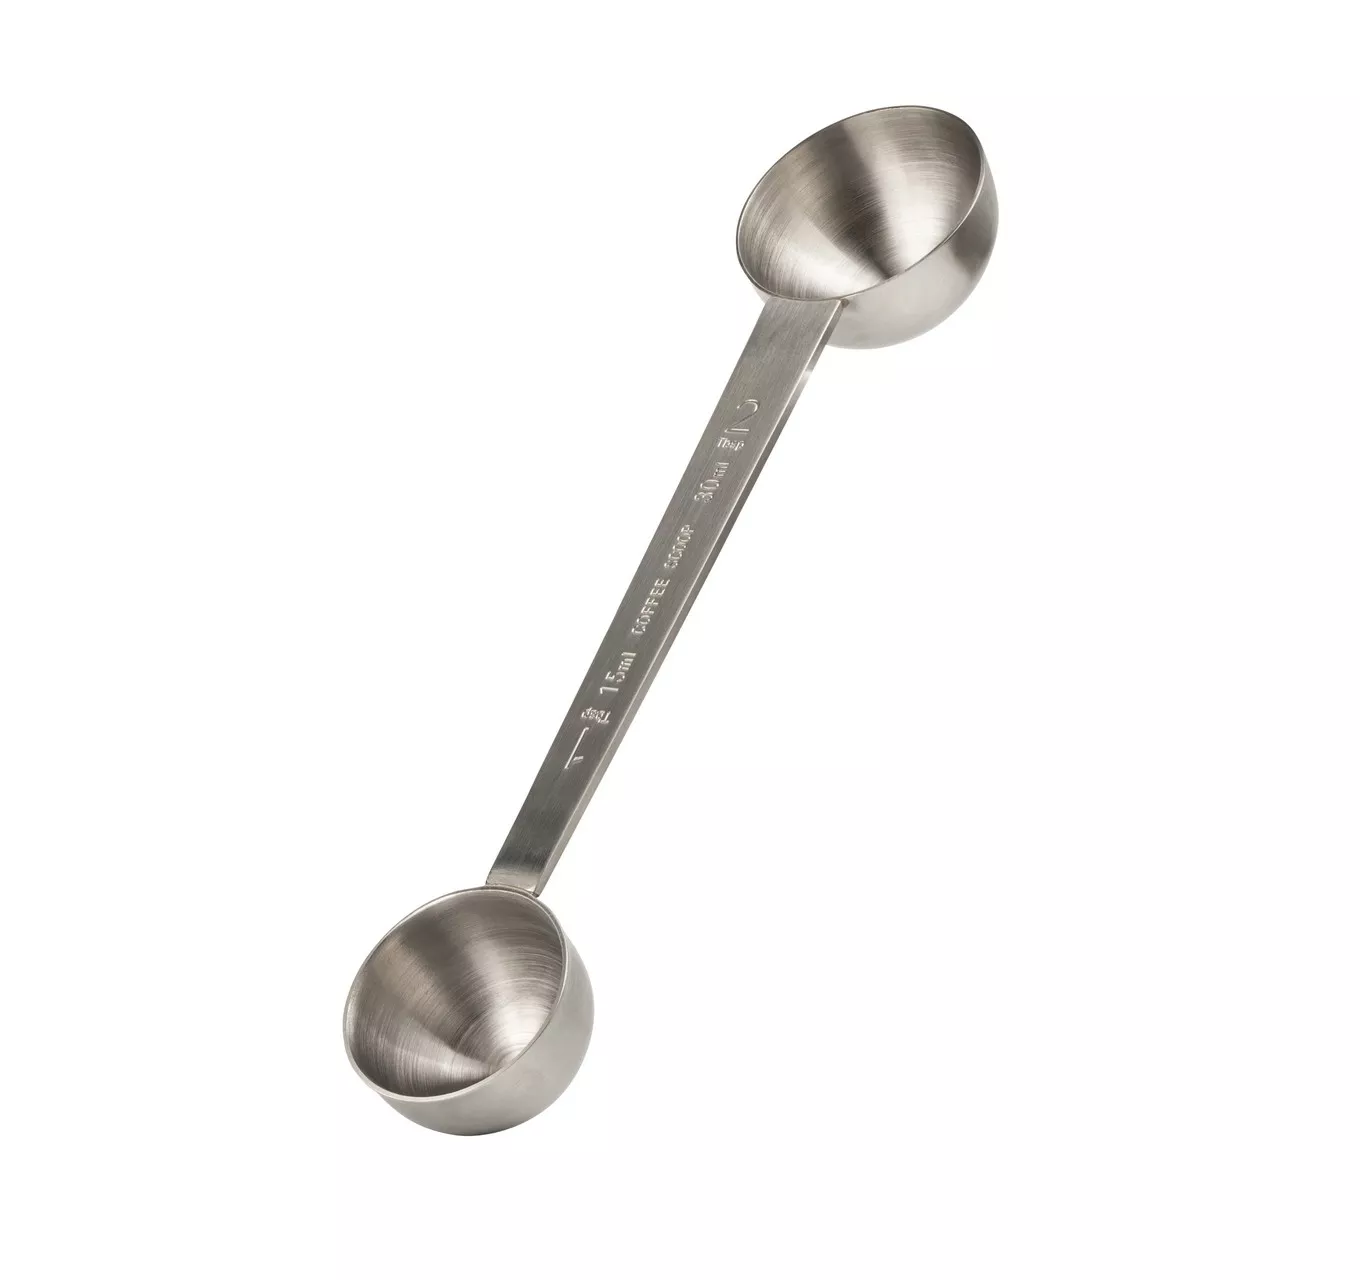 S/S Coffee Measuring Spoon